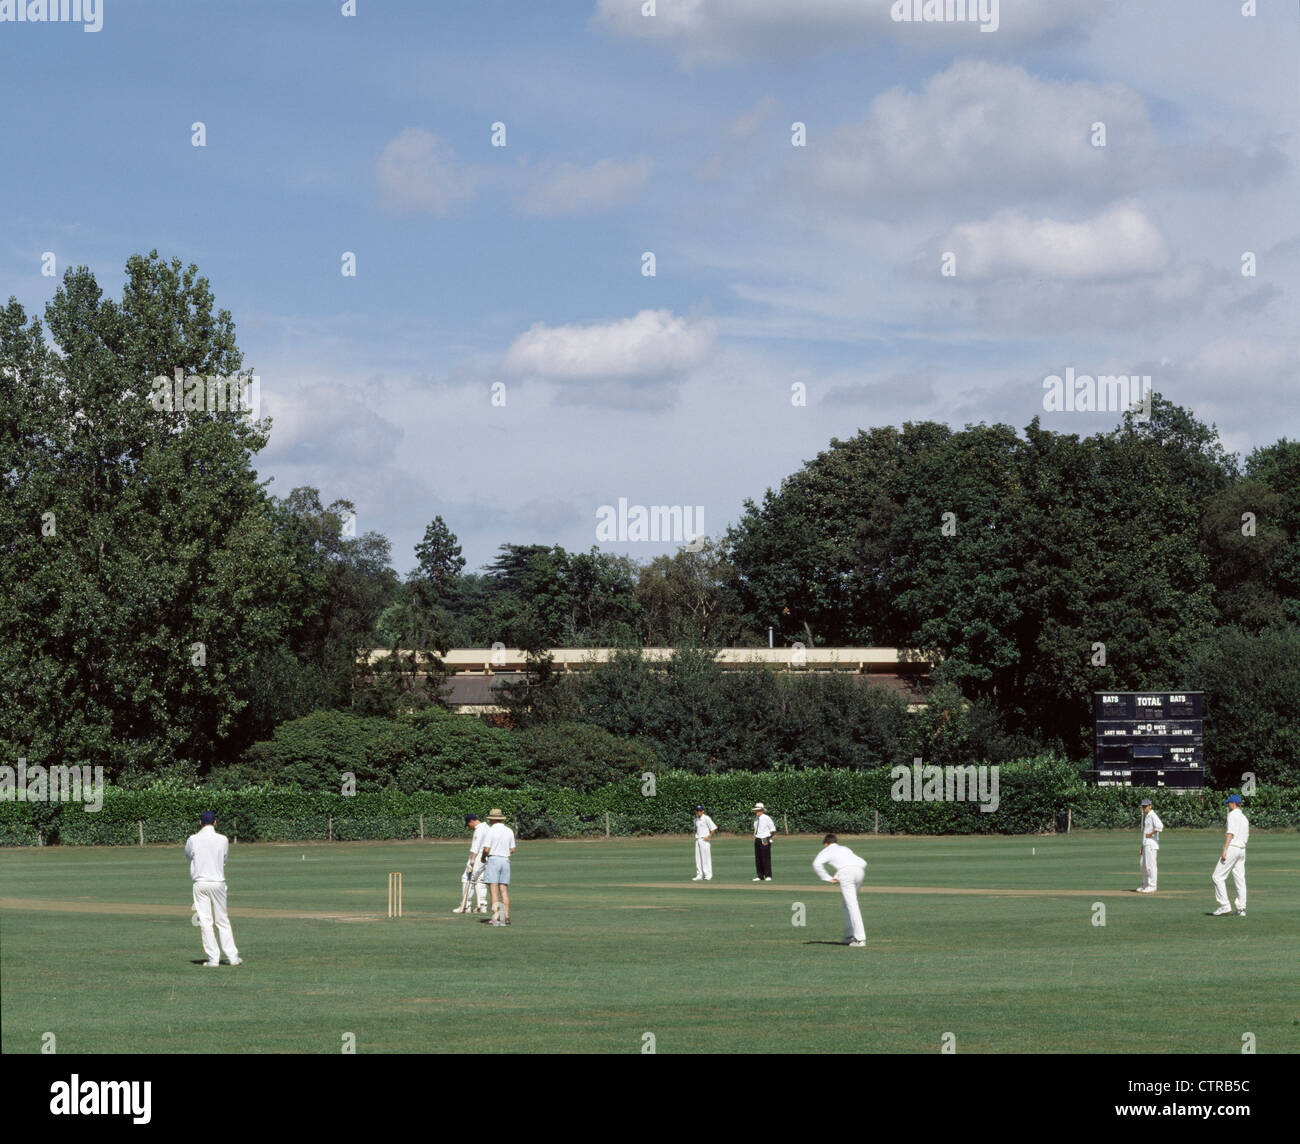 the boundary house cricket match with scoreboard Stock Photo